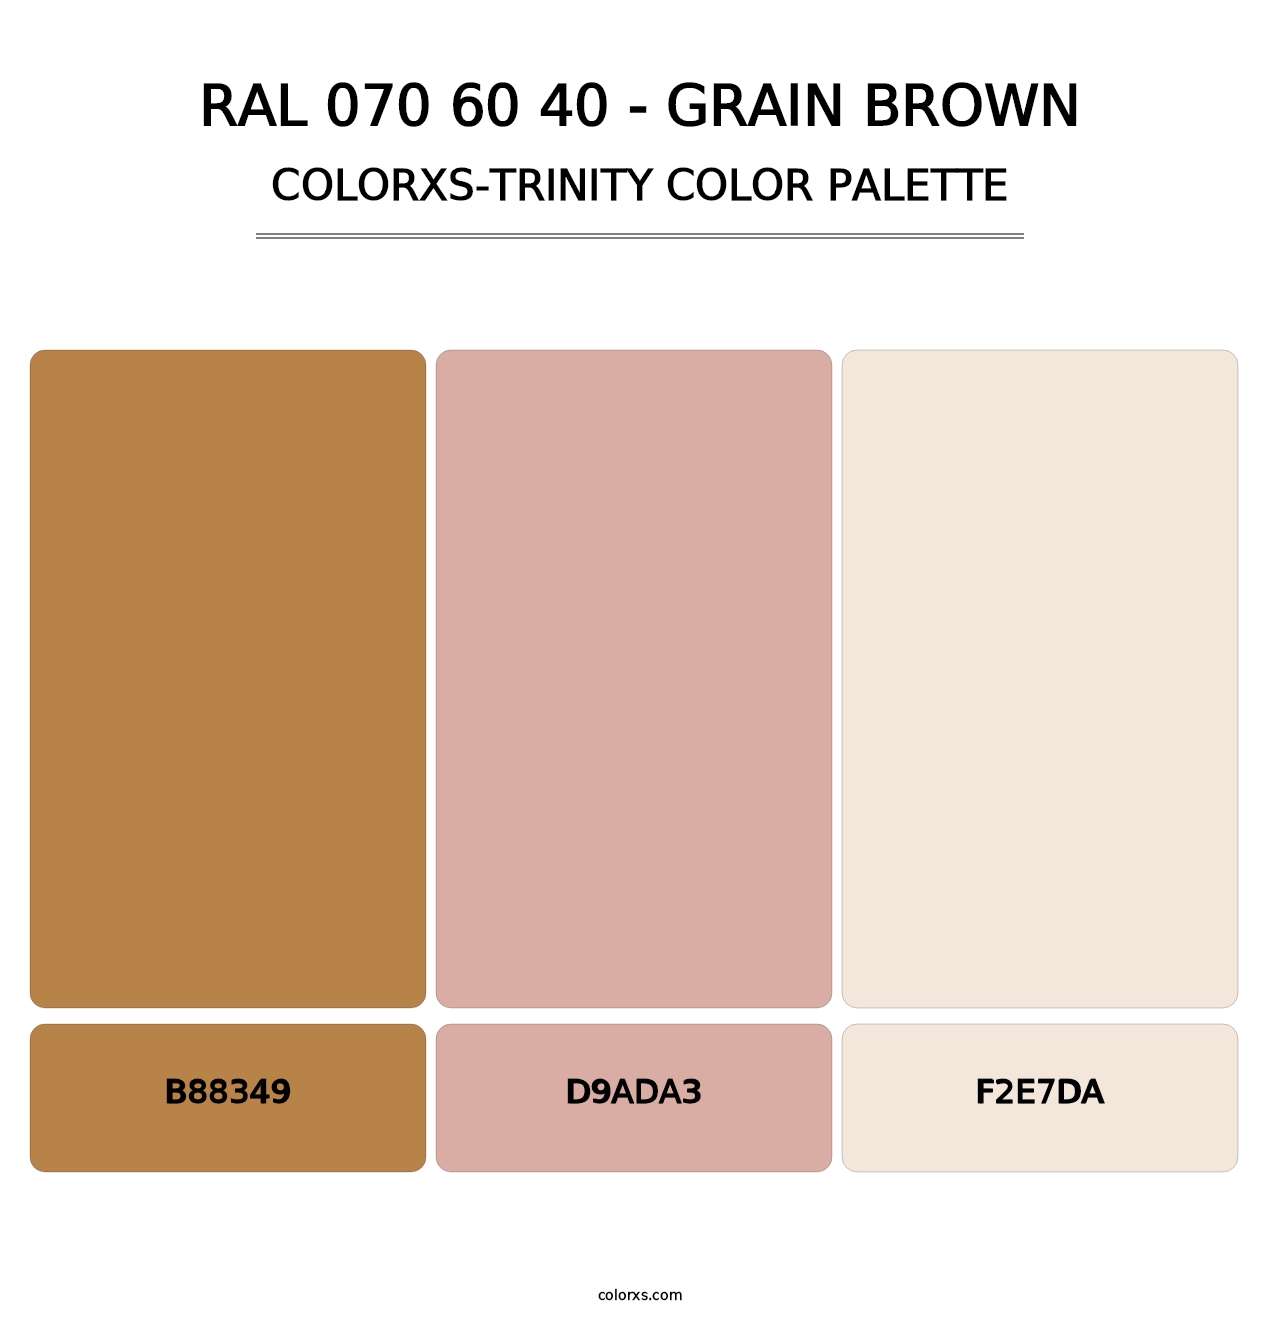 RAL 070 60 40 - Grain Brown - Colorxs Trinity Palette